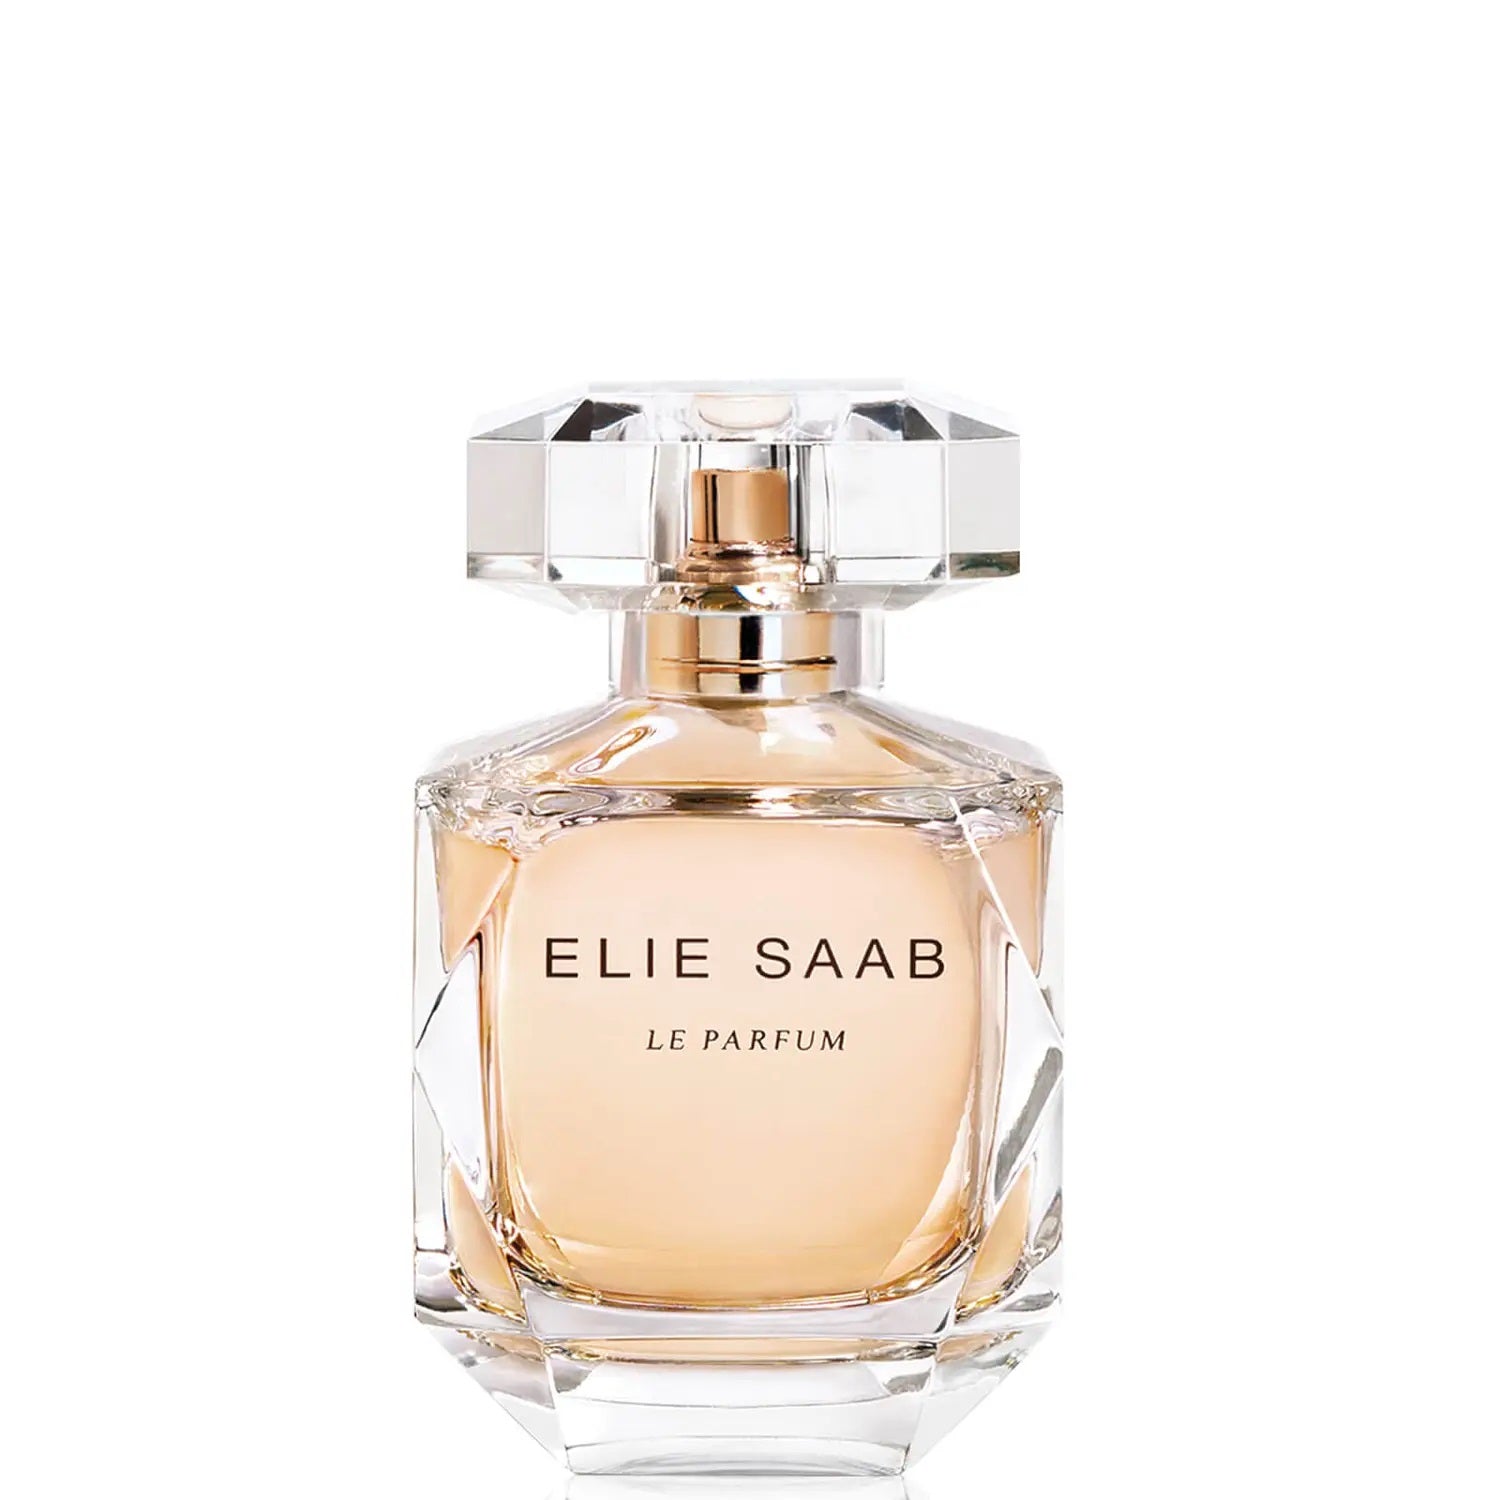 Elie Saab Le Parfum Eau de Parfum 30ml Spray - Peacock Bazaar